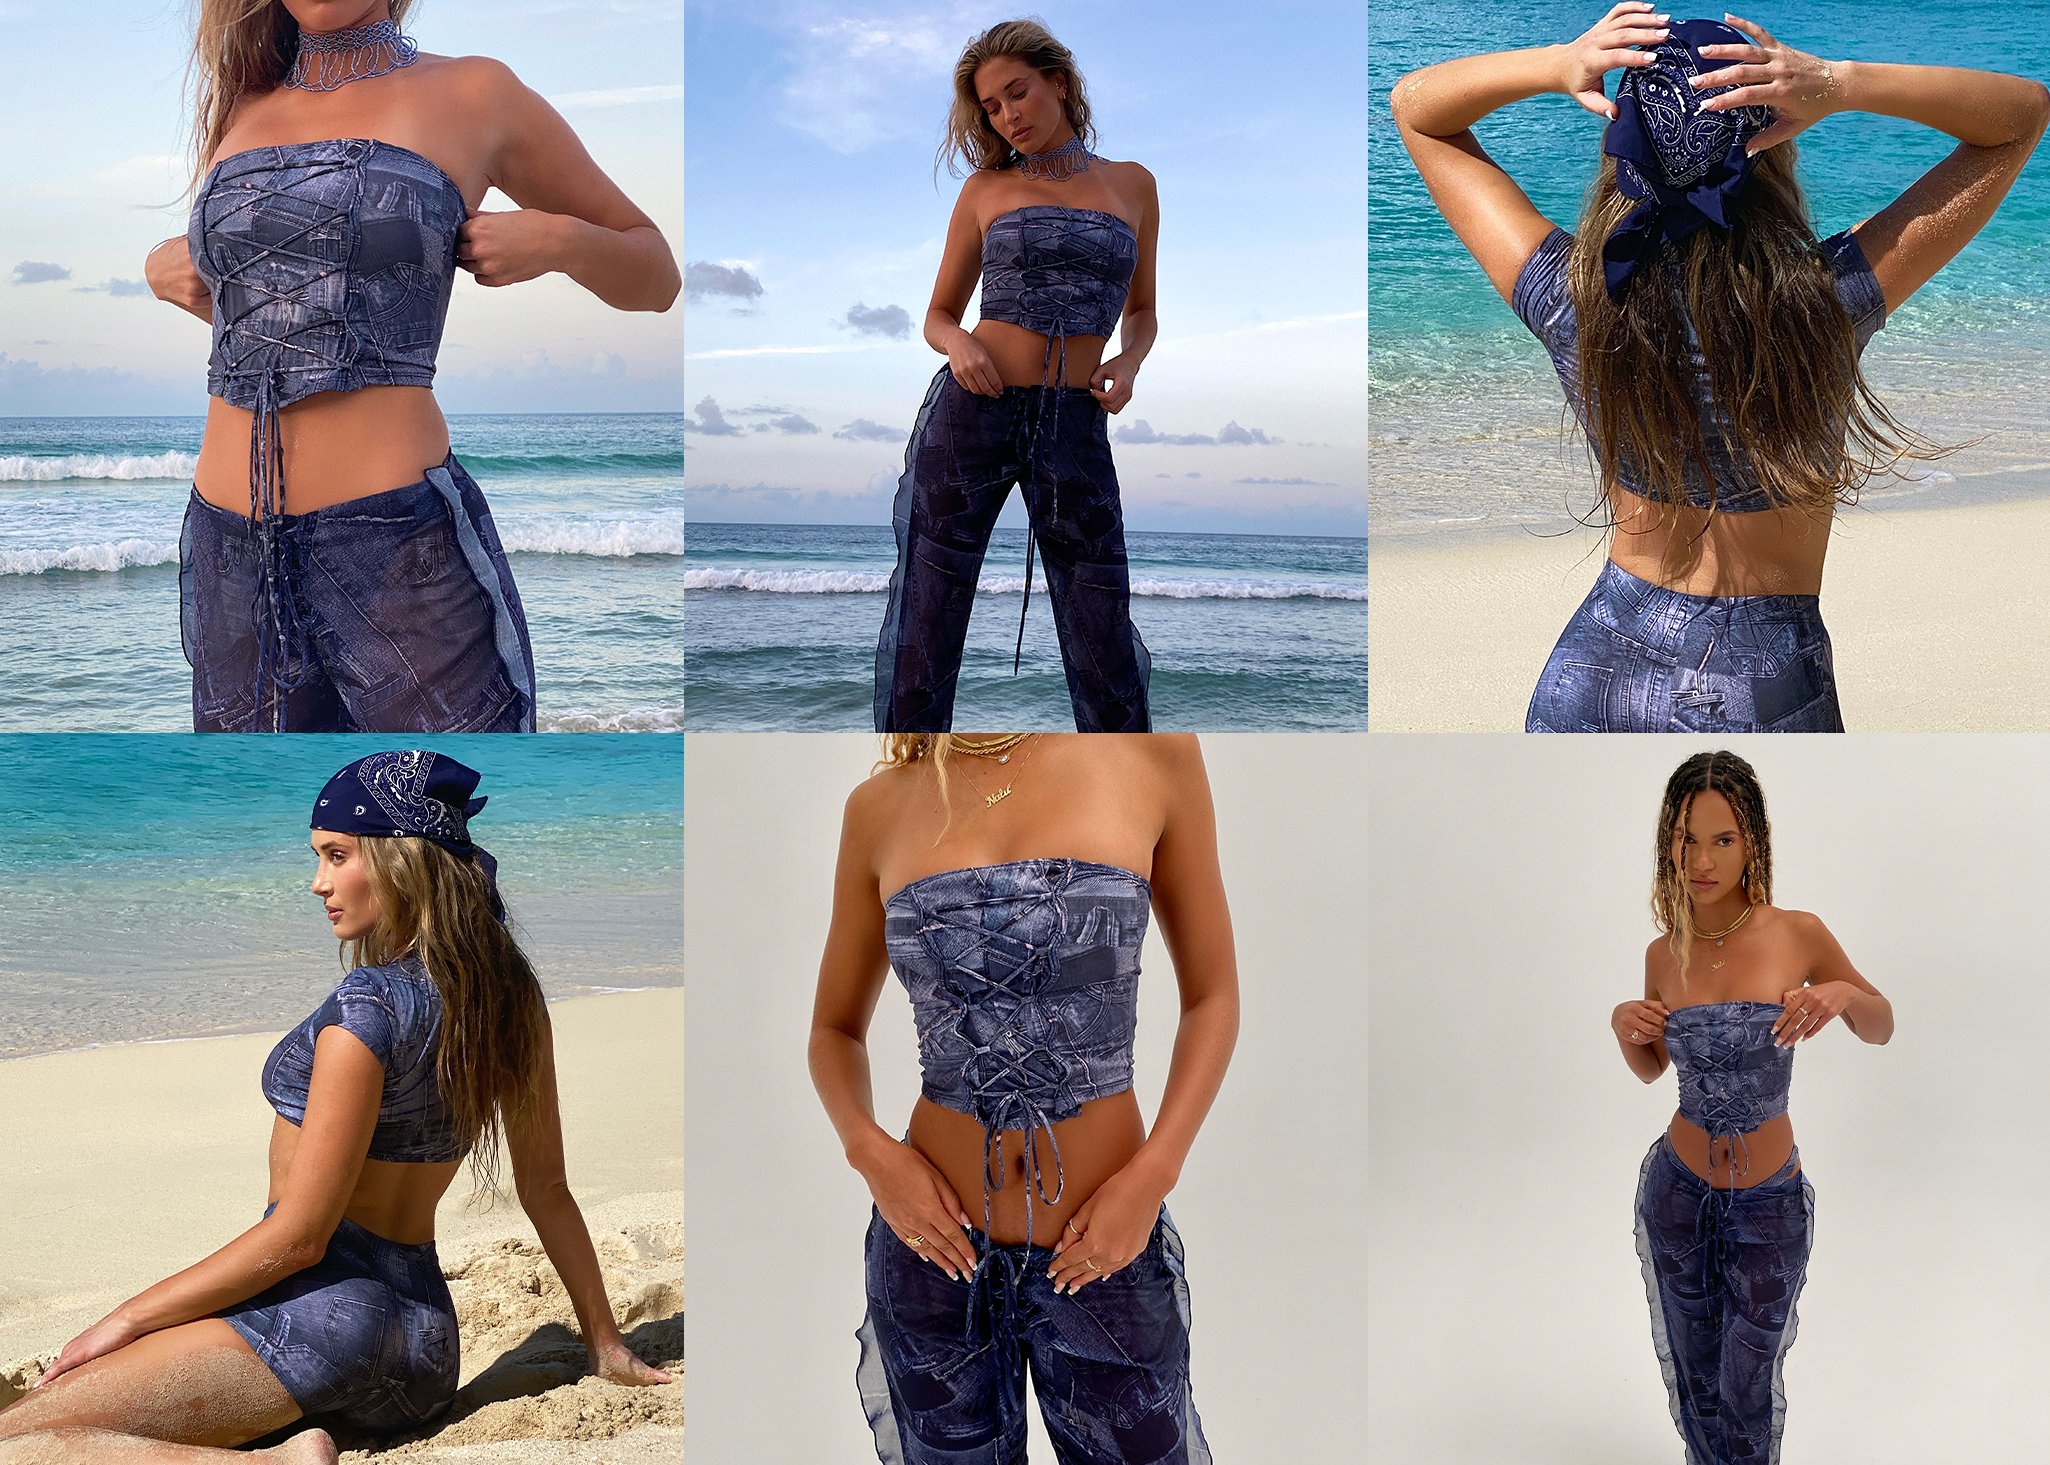 Blue Jean denim bikinis and clothing by Frankies Bikinis